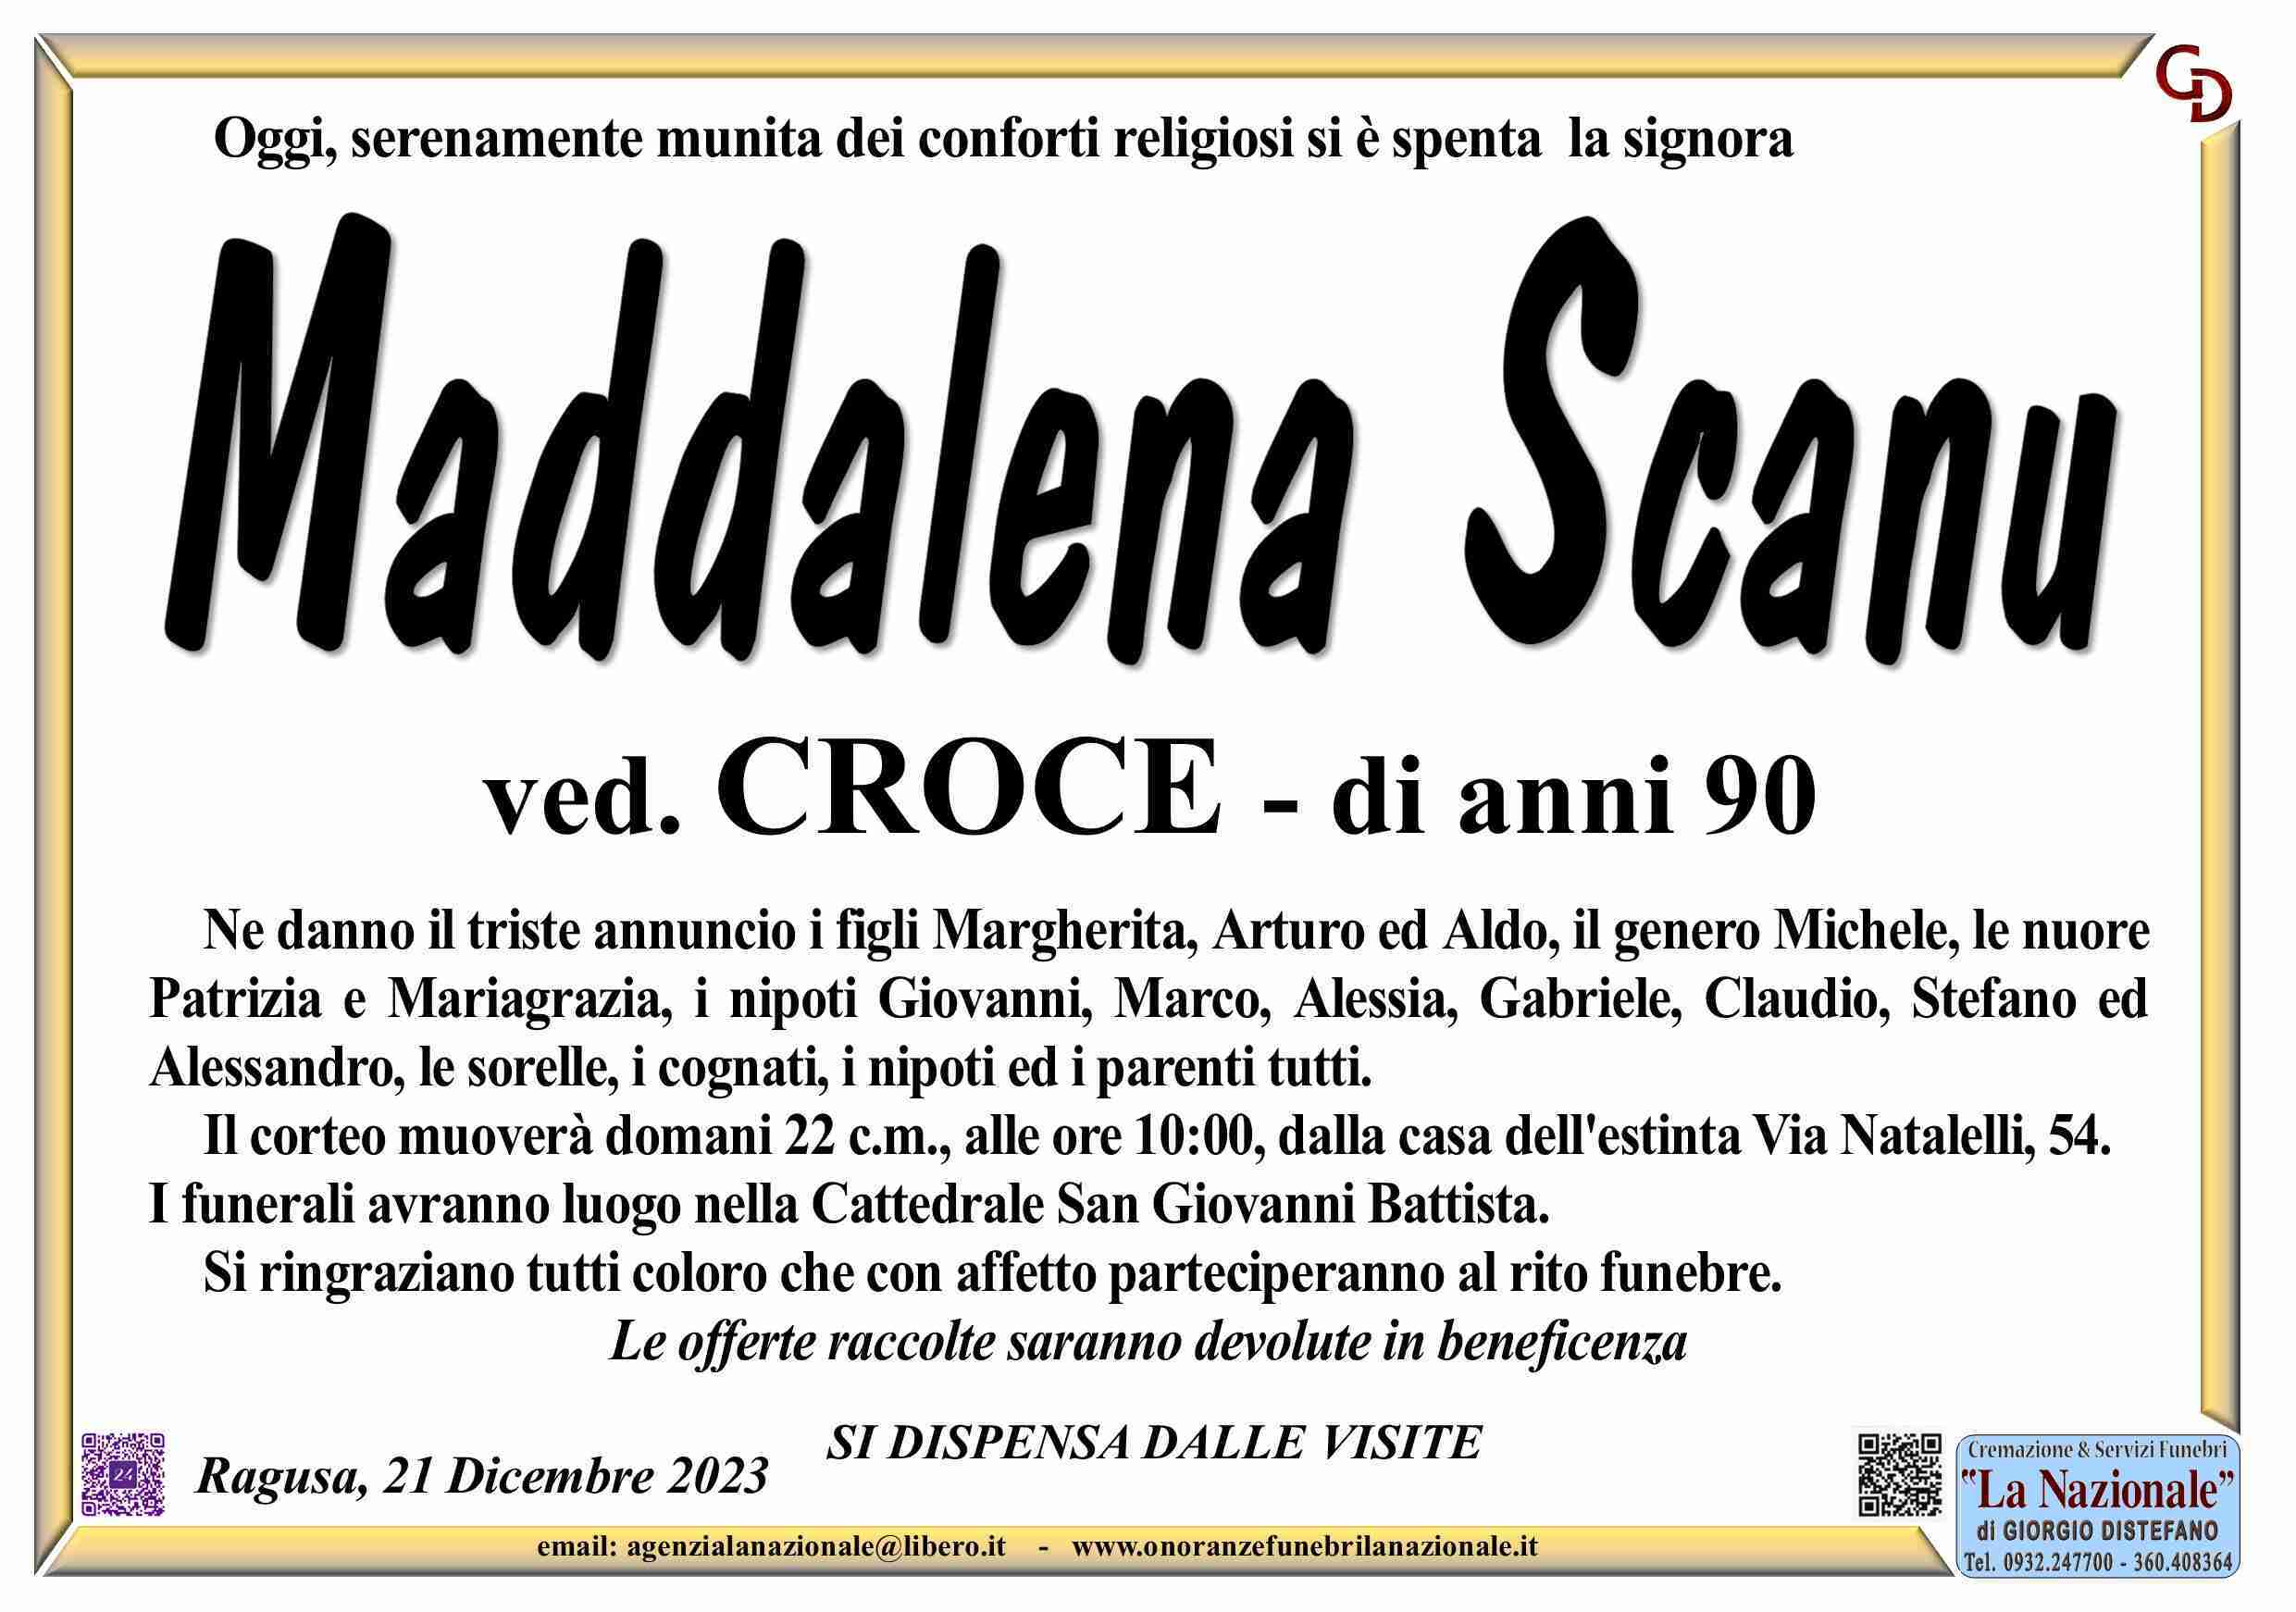 Maddalena Scanu